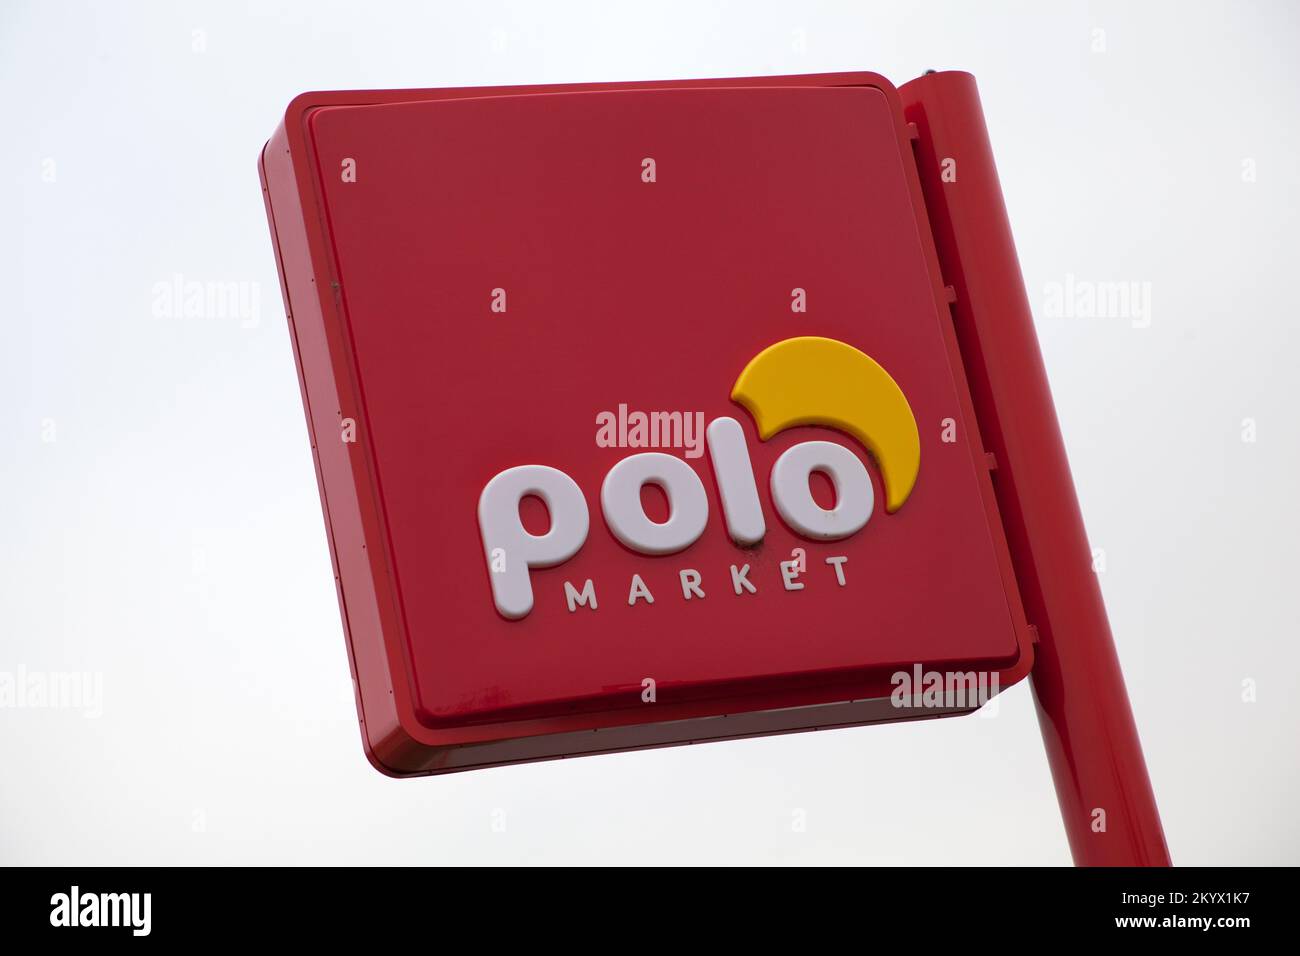 Polo Market sign at a store in Pruszcz Gdanski, Poland Stock Photo - Alamy